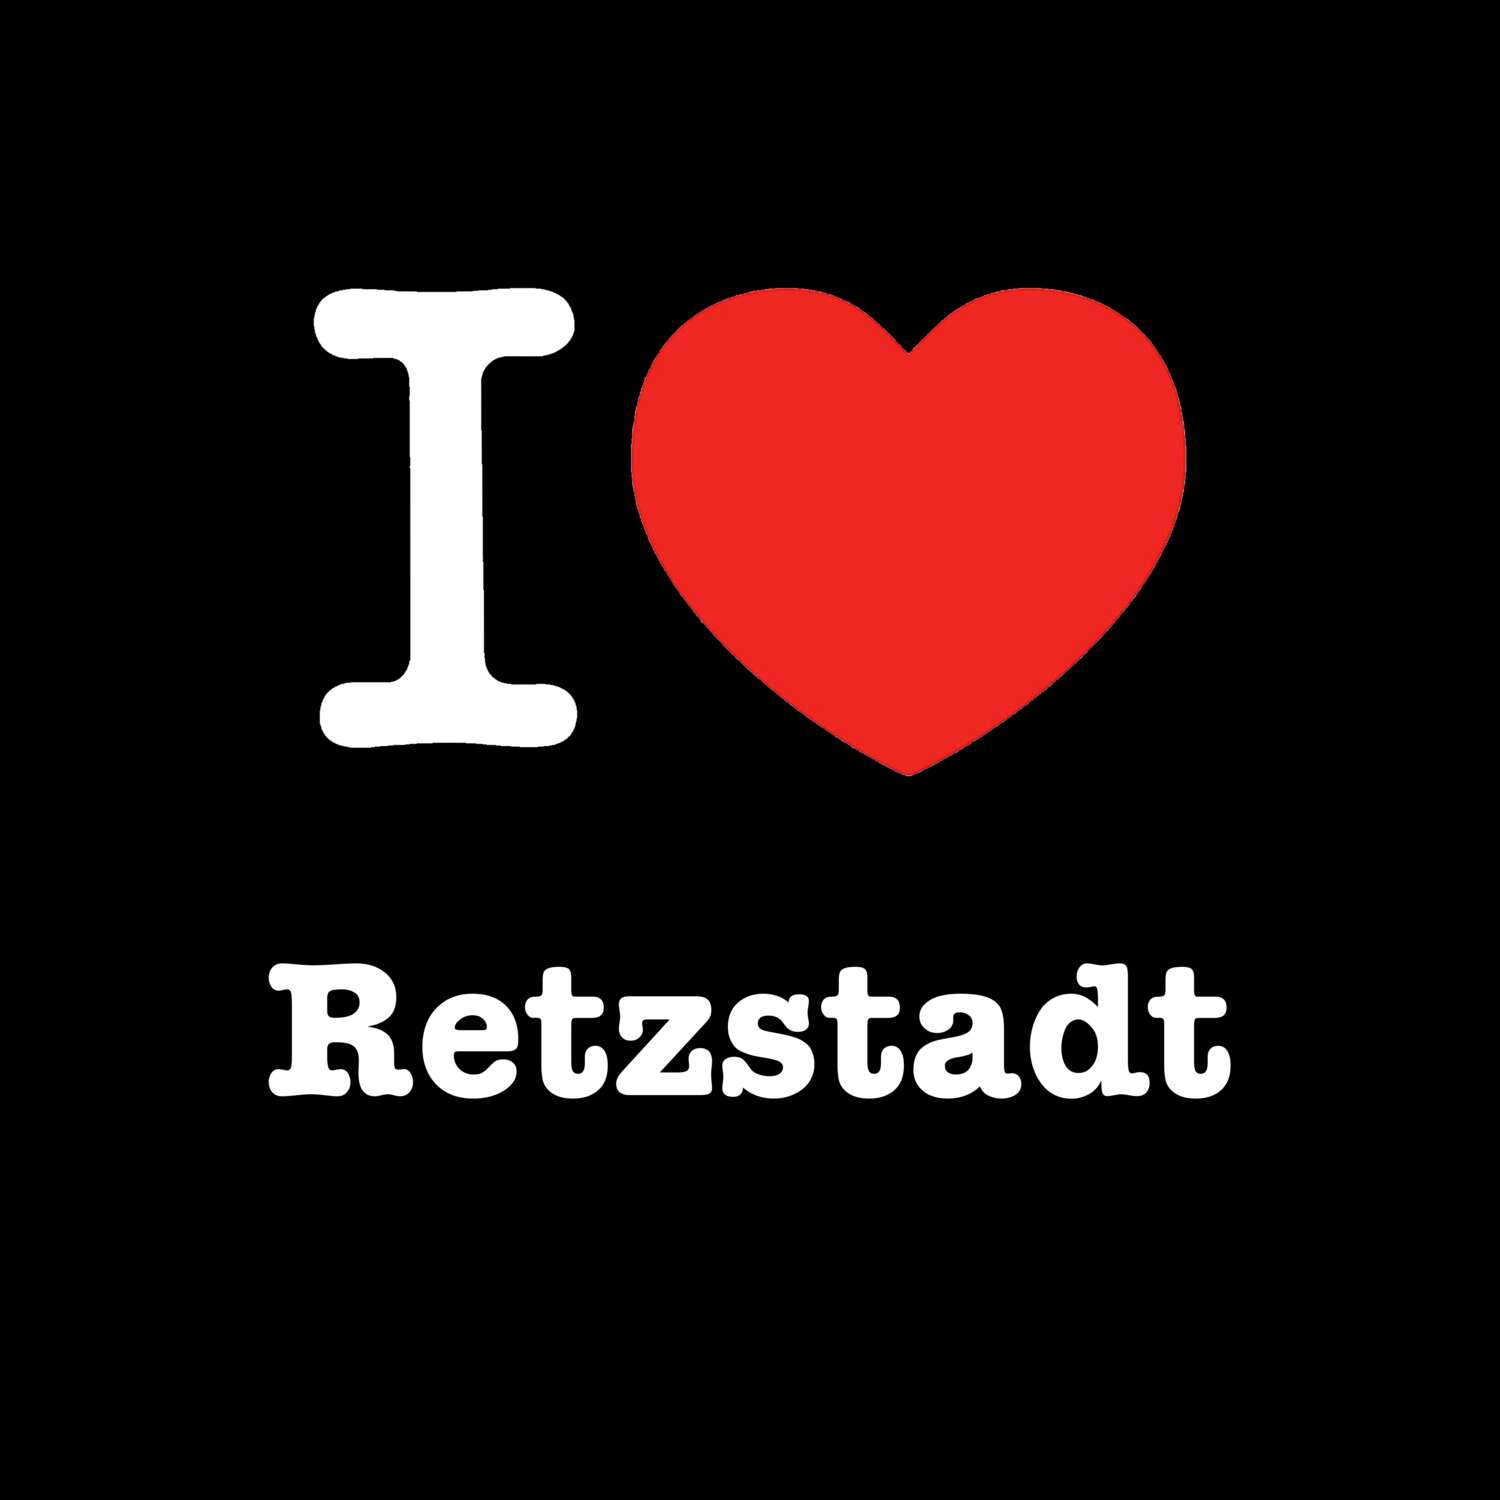 Retzstadt T-Shirt »I love«